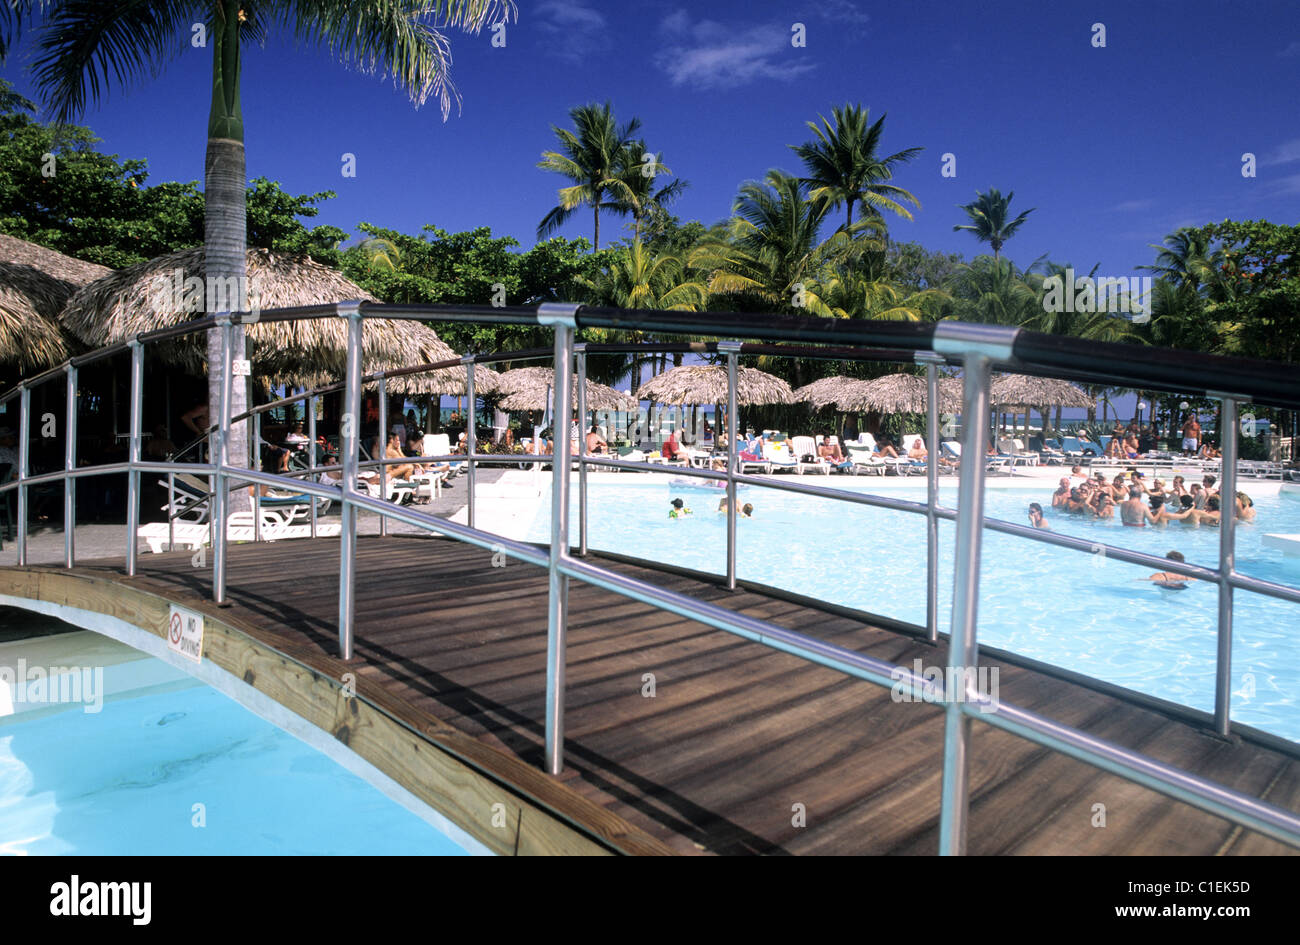 Dominican Republic, Puerto Plata Province, Riu Merengue hotel Stock Photo -  Alamy